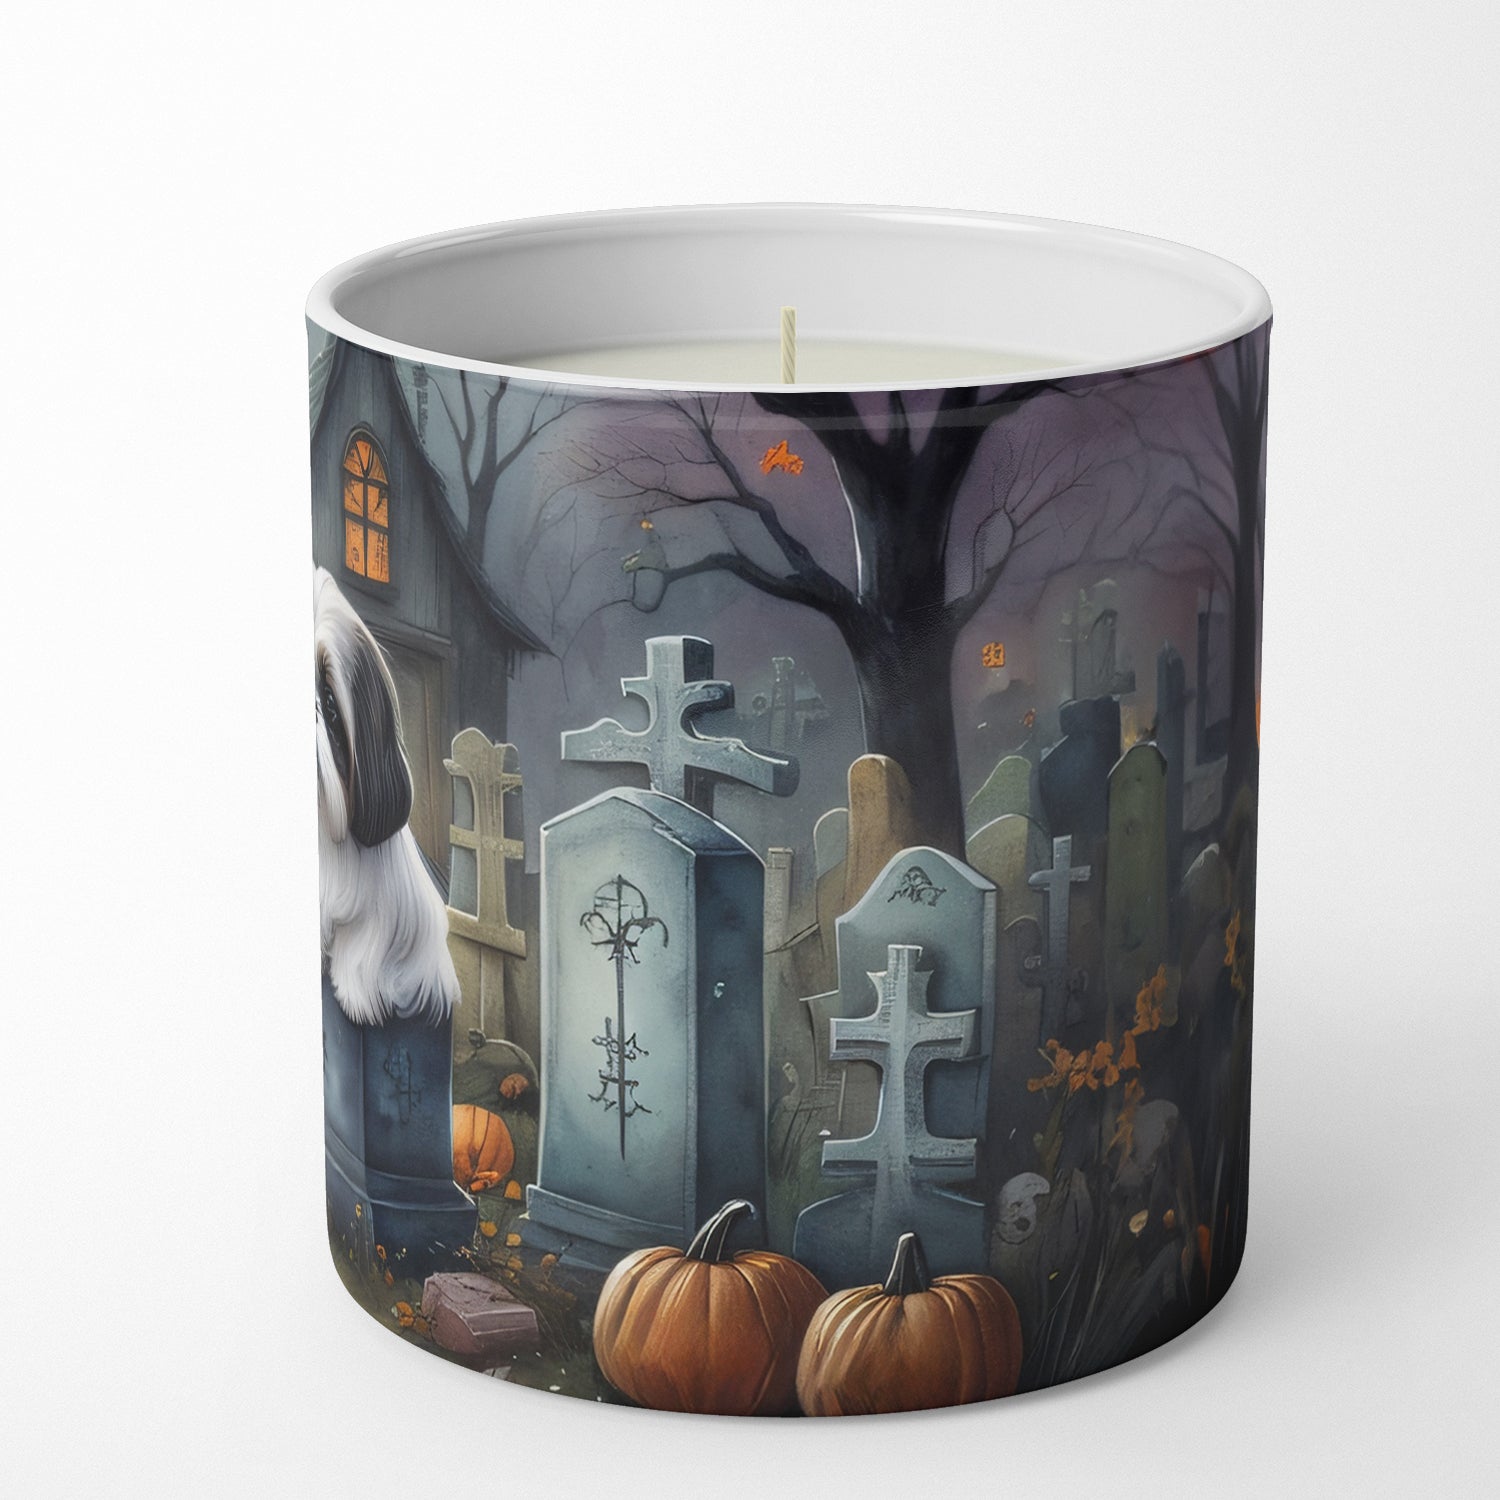 Shih Tzu Spooky Halloween Decorative Soy Candle